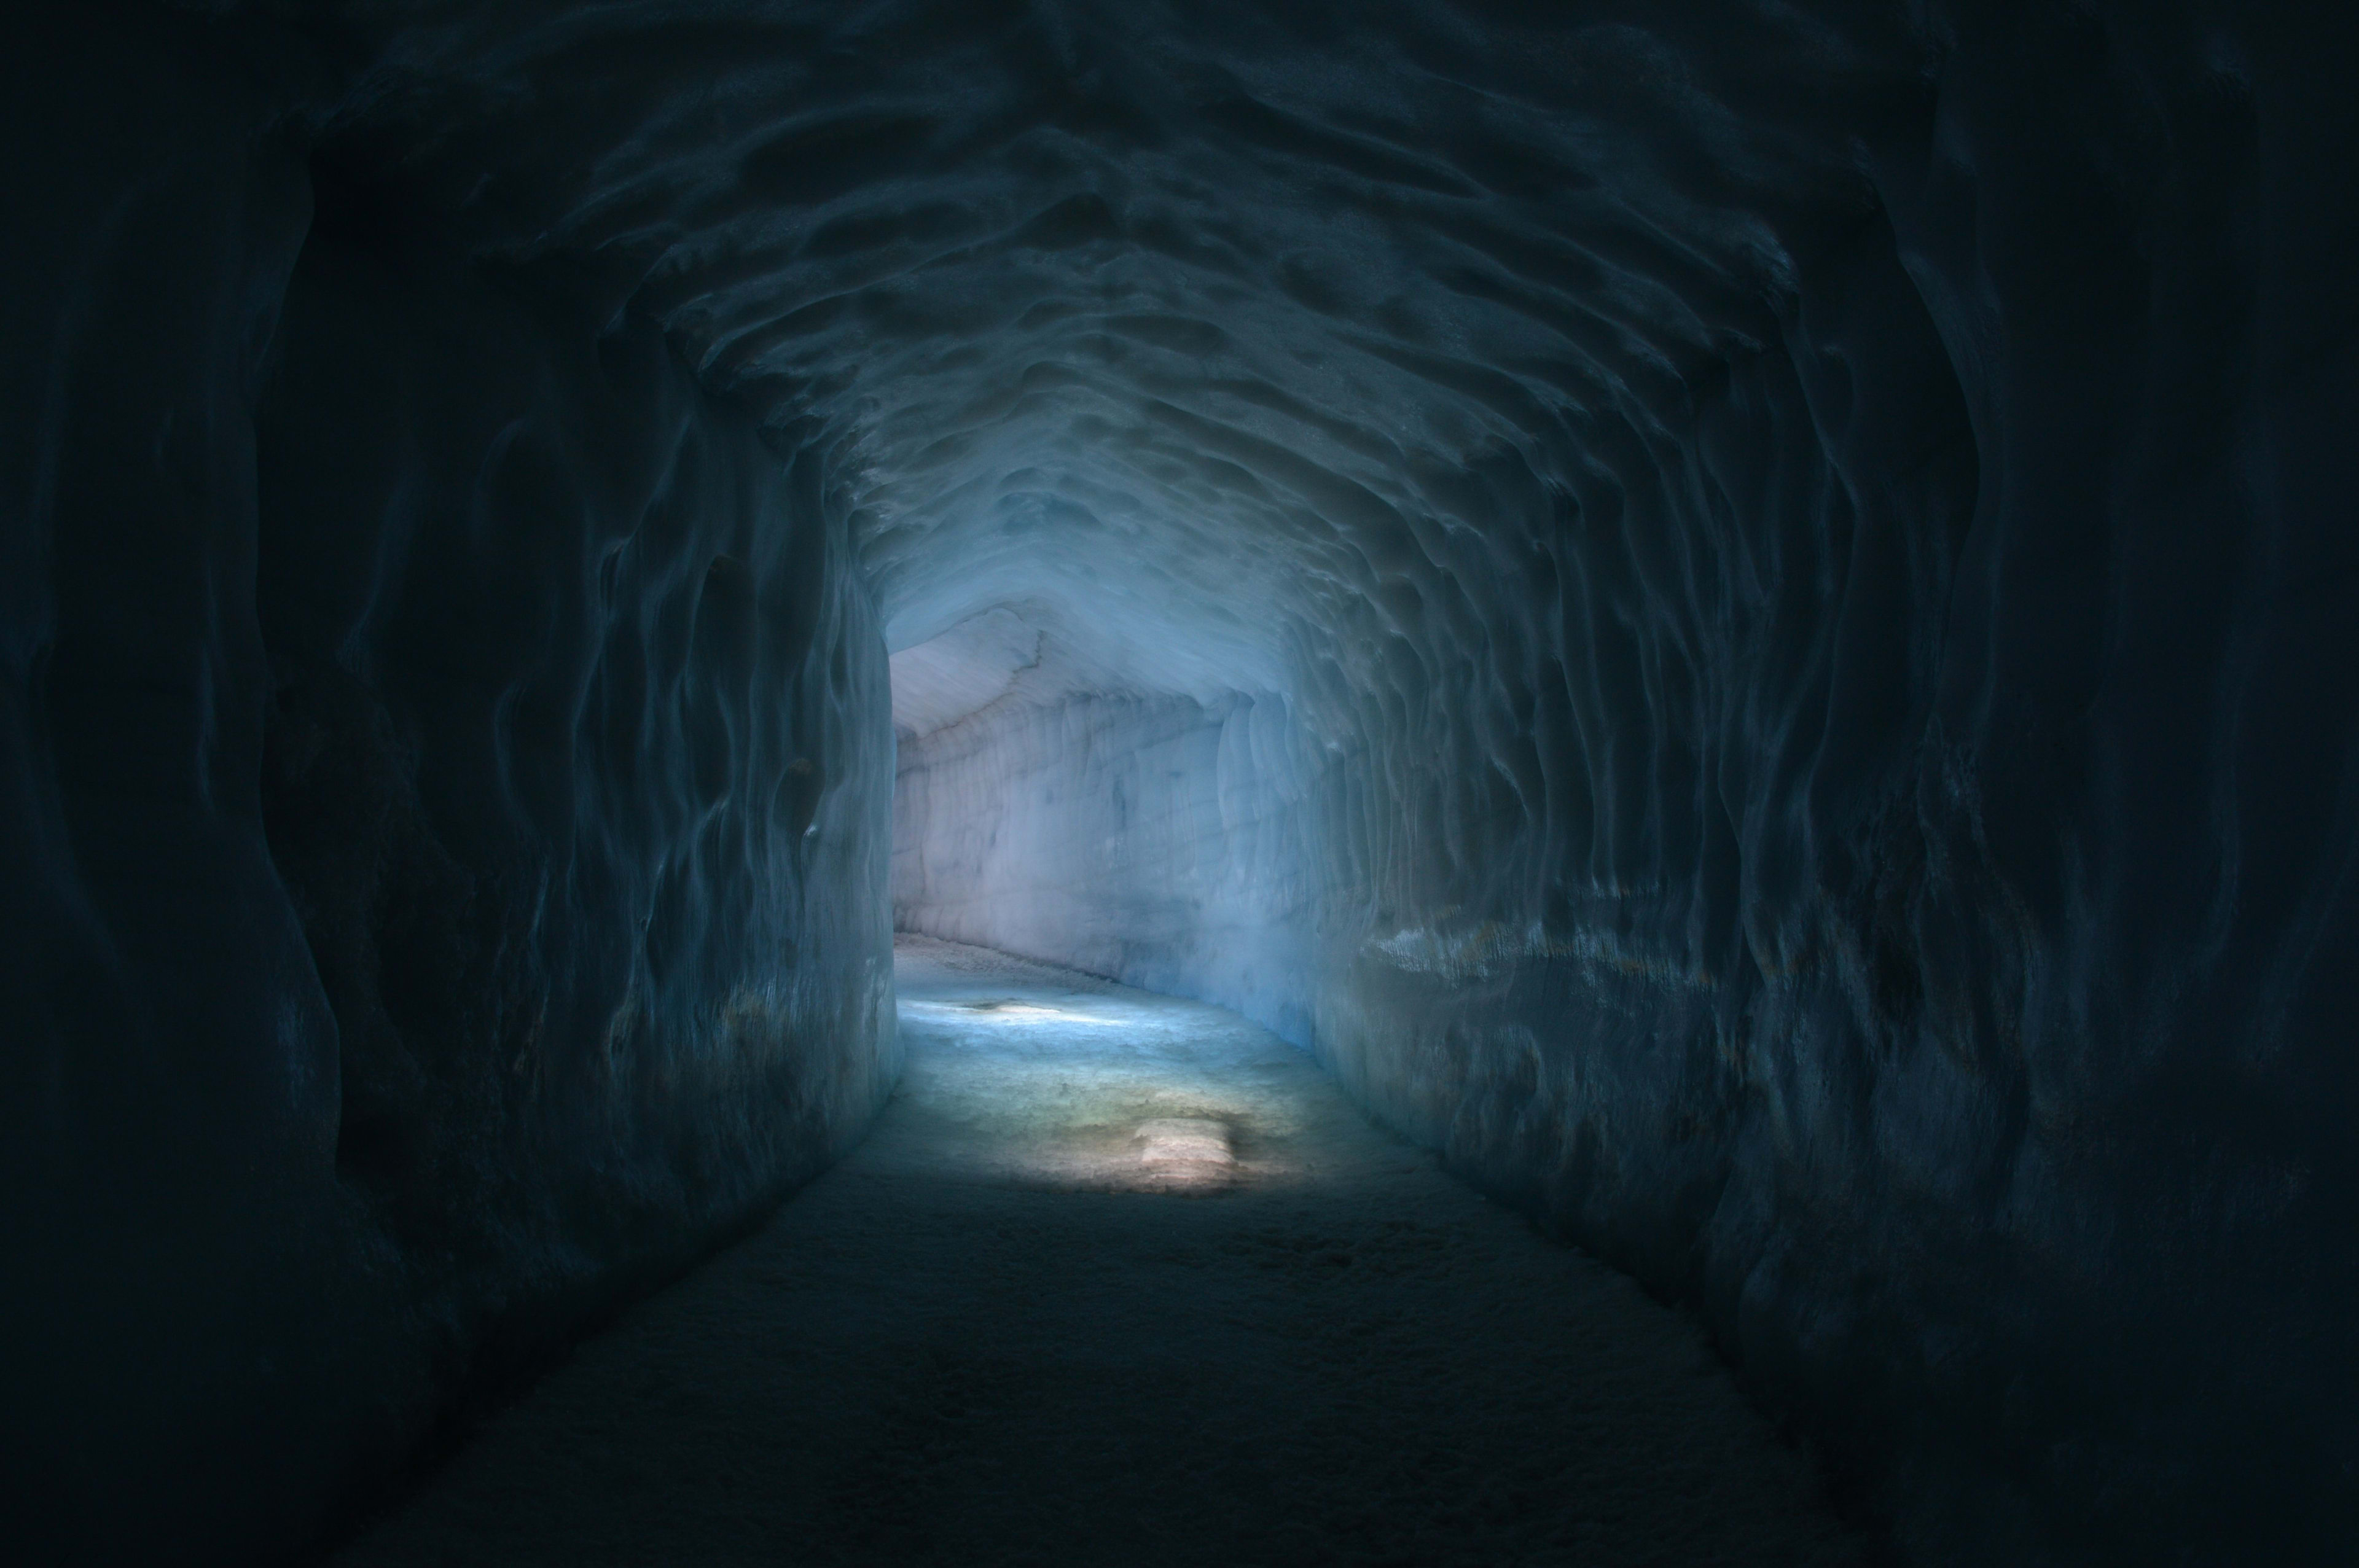 man-made langjokull ice tunnel 